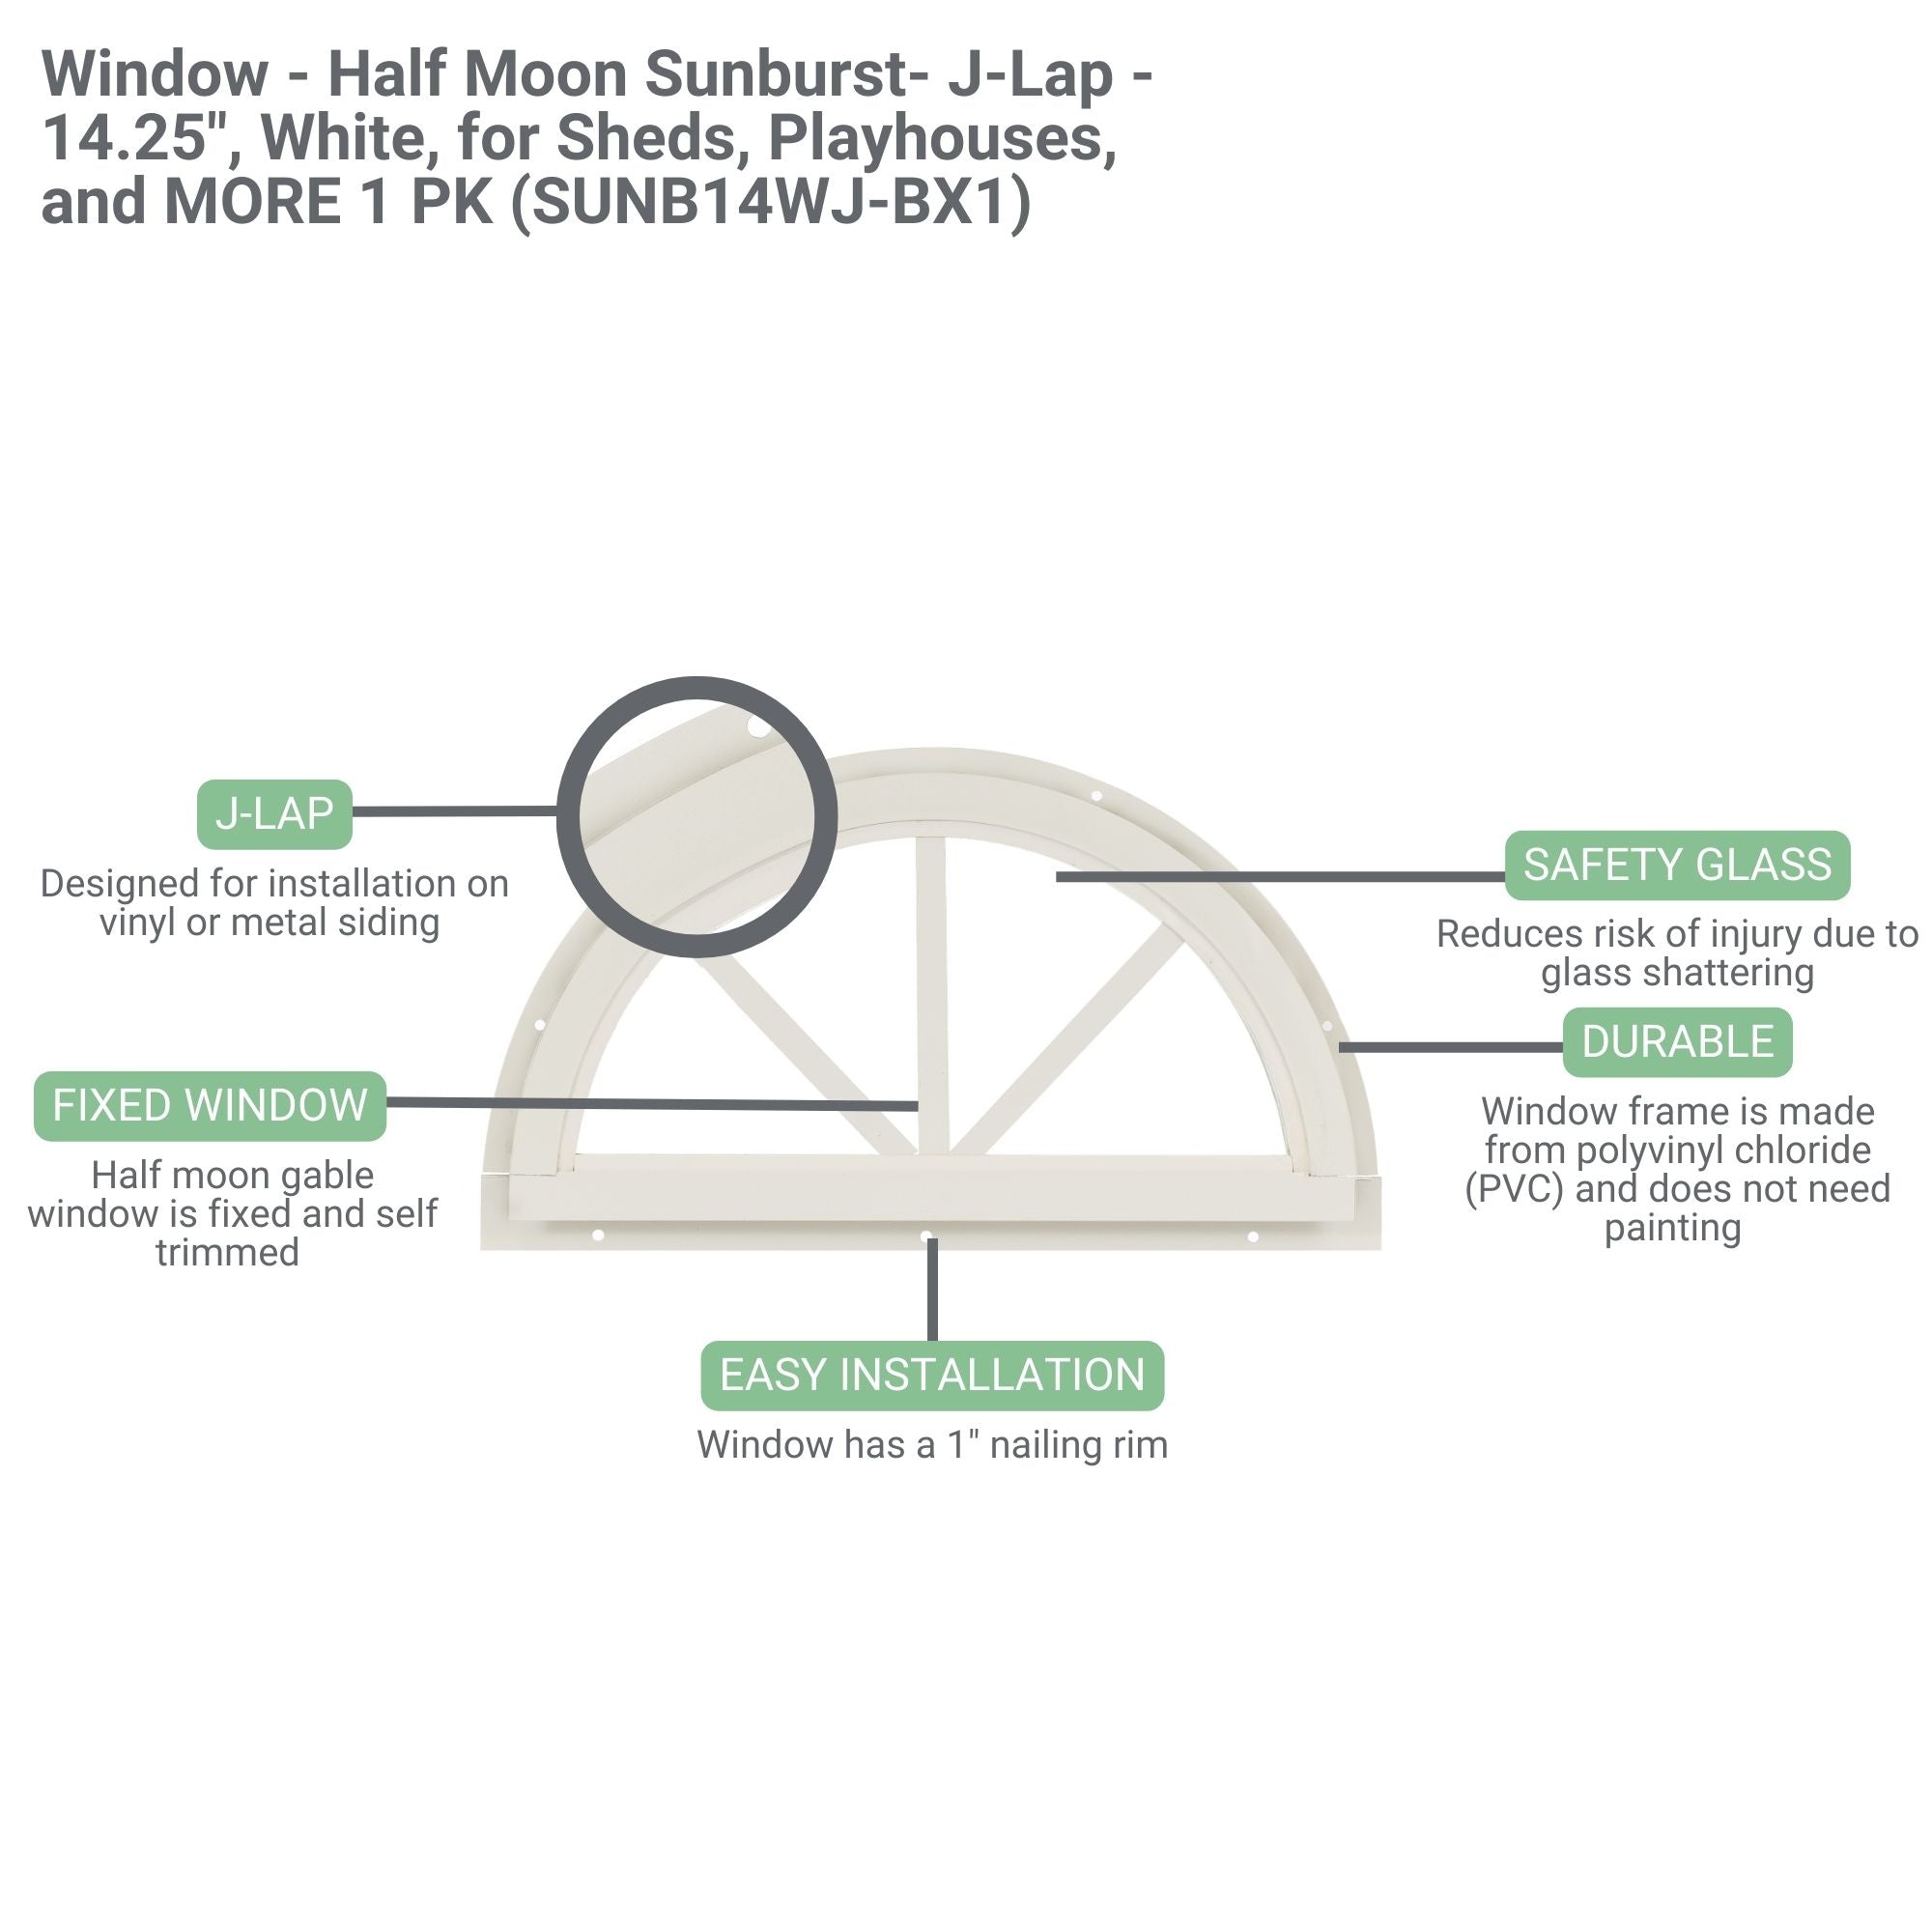 14.25" Half Moon Sunburst J-Lap Shed Window